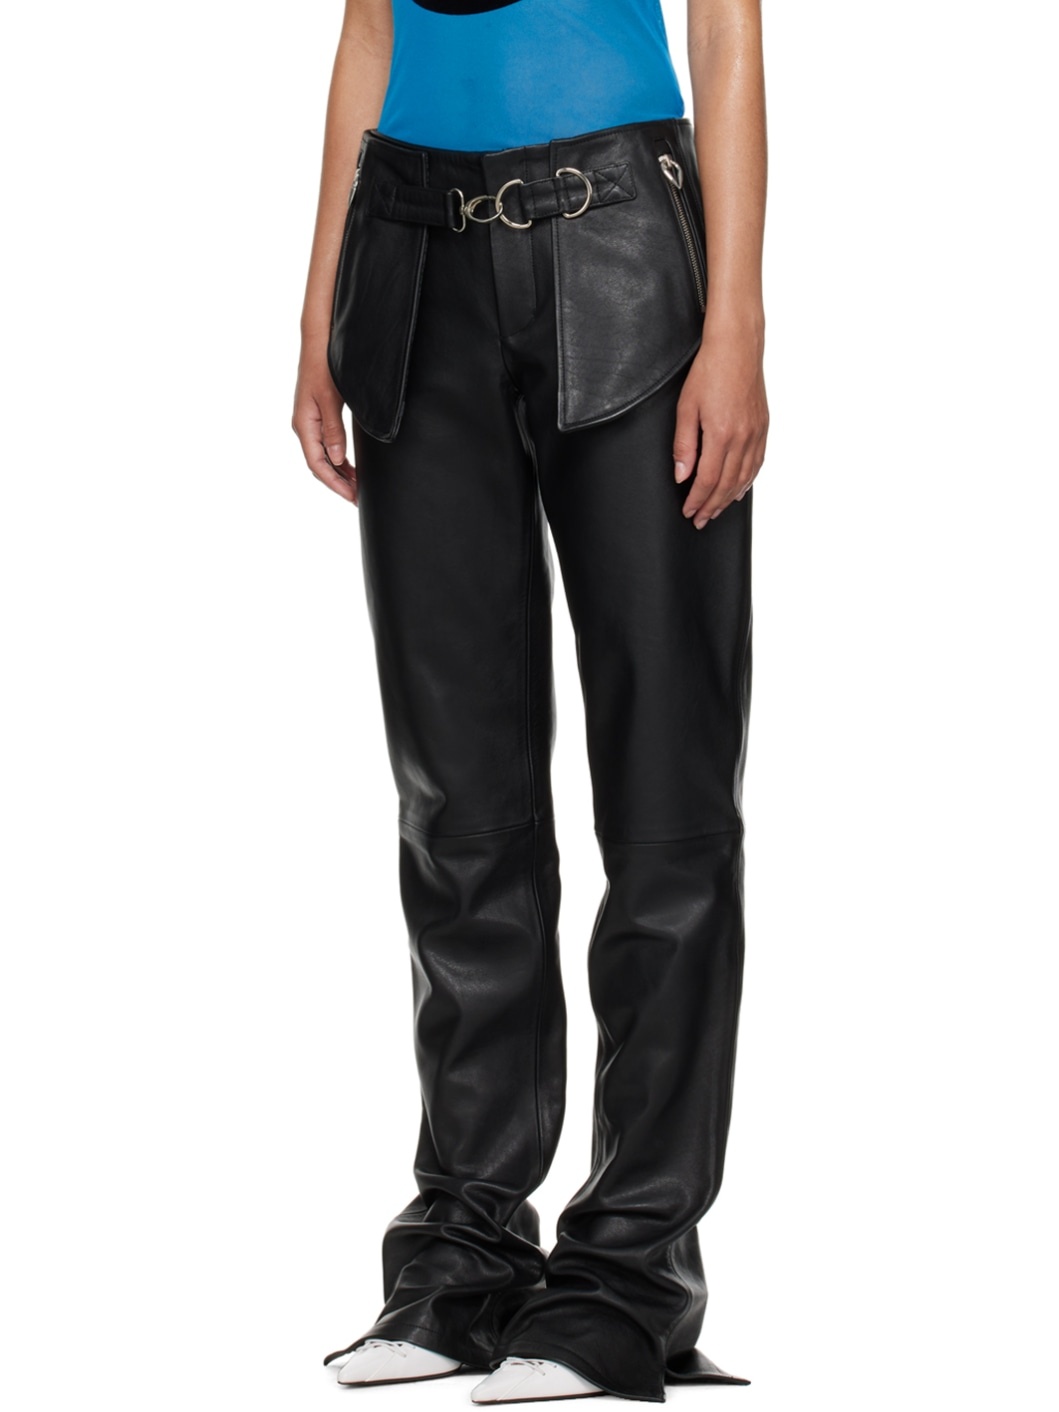 Black Shayne Oliver Edition Leather Pants - 4